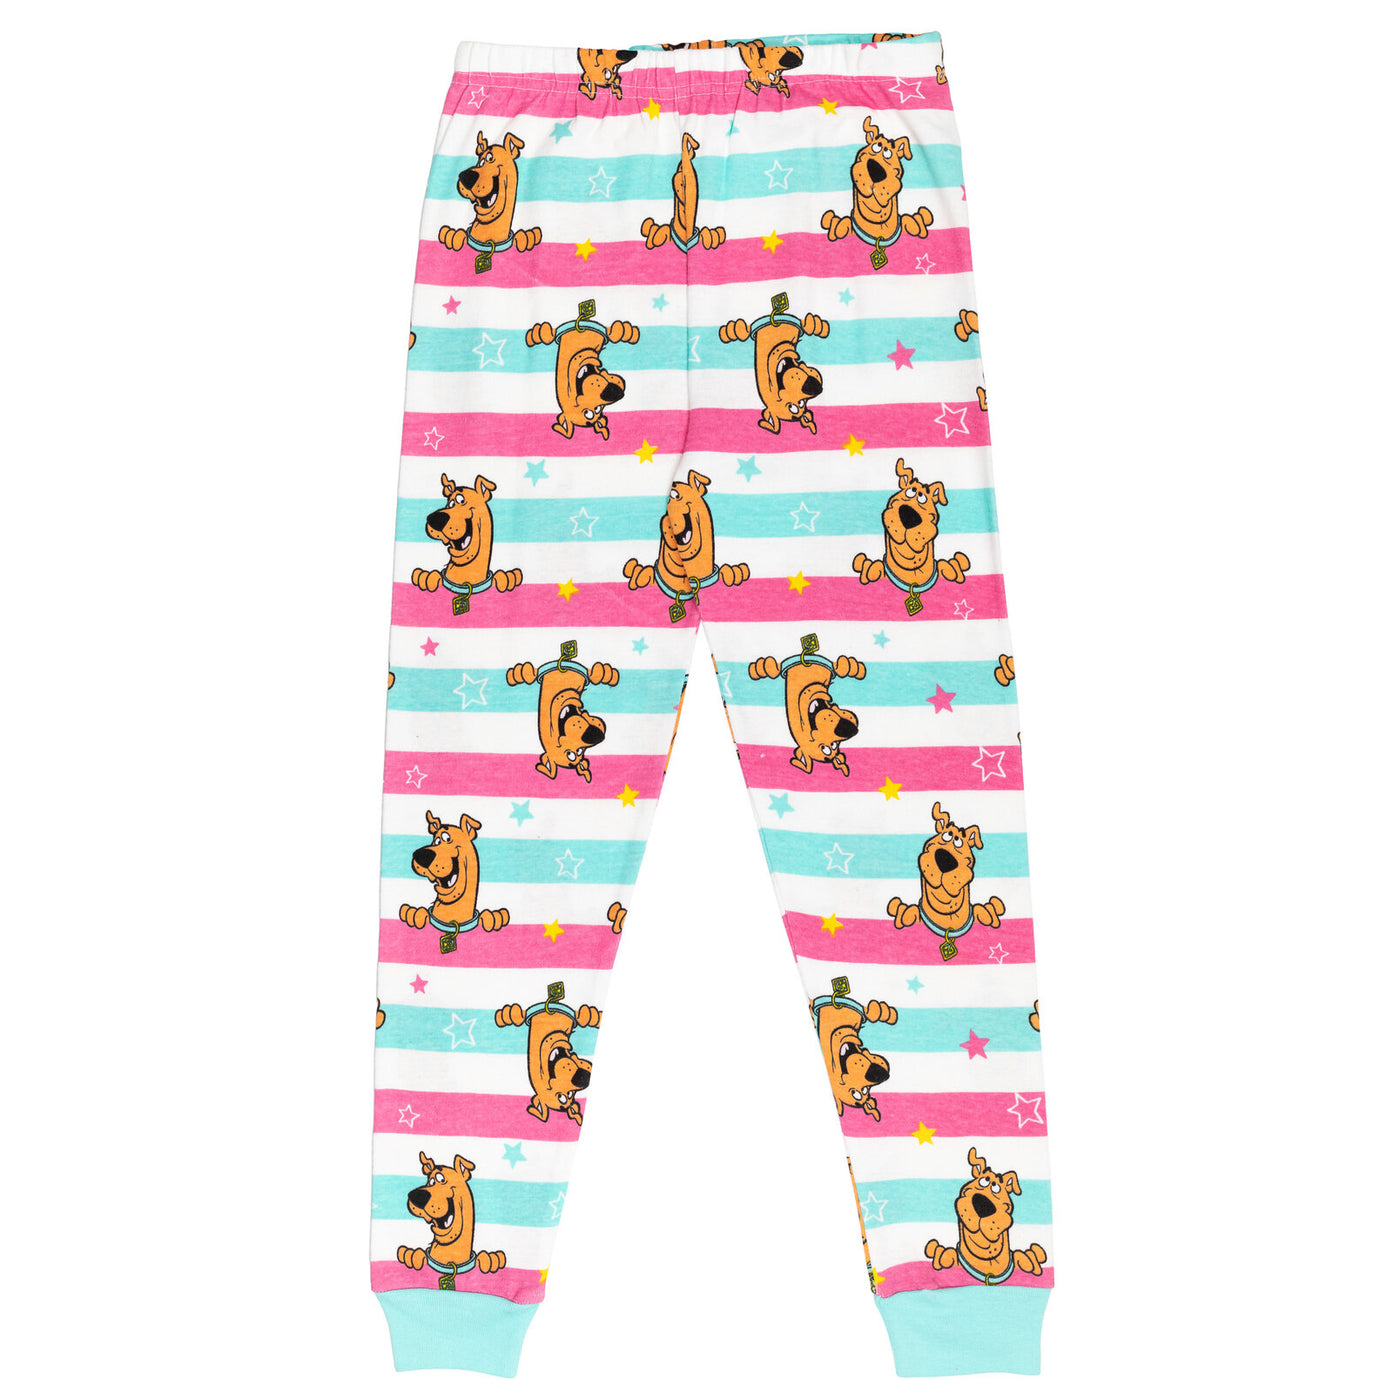 Scooby-Doo Scooby Doo Pajama Shirt and Pants Sleep Set